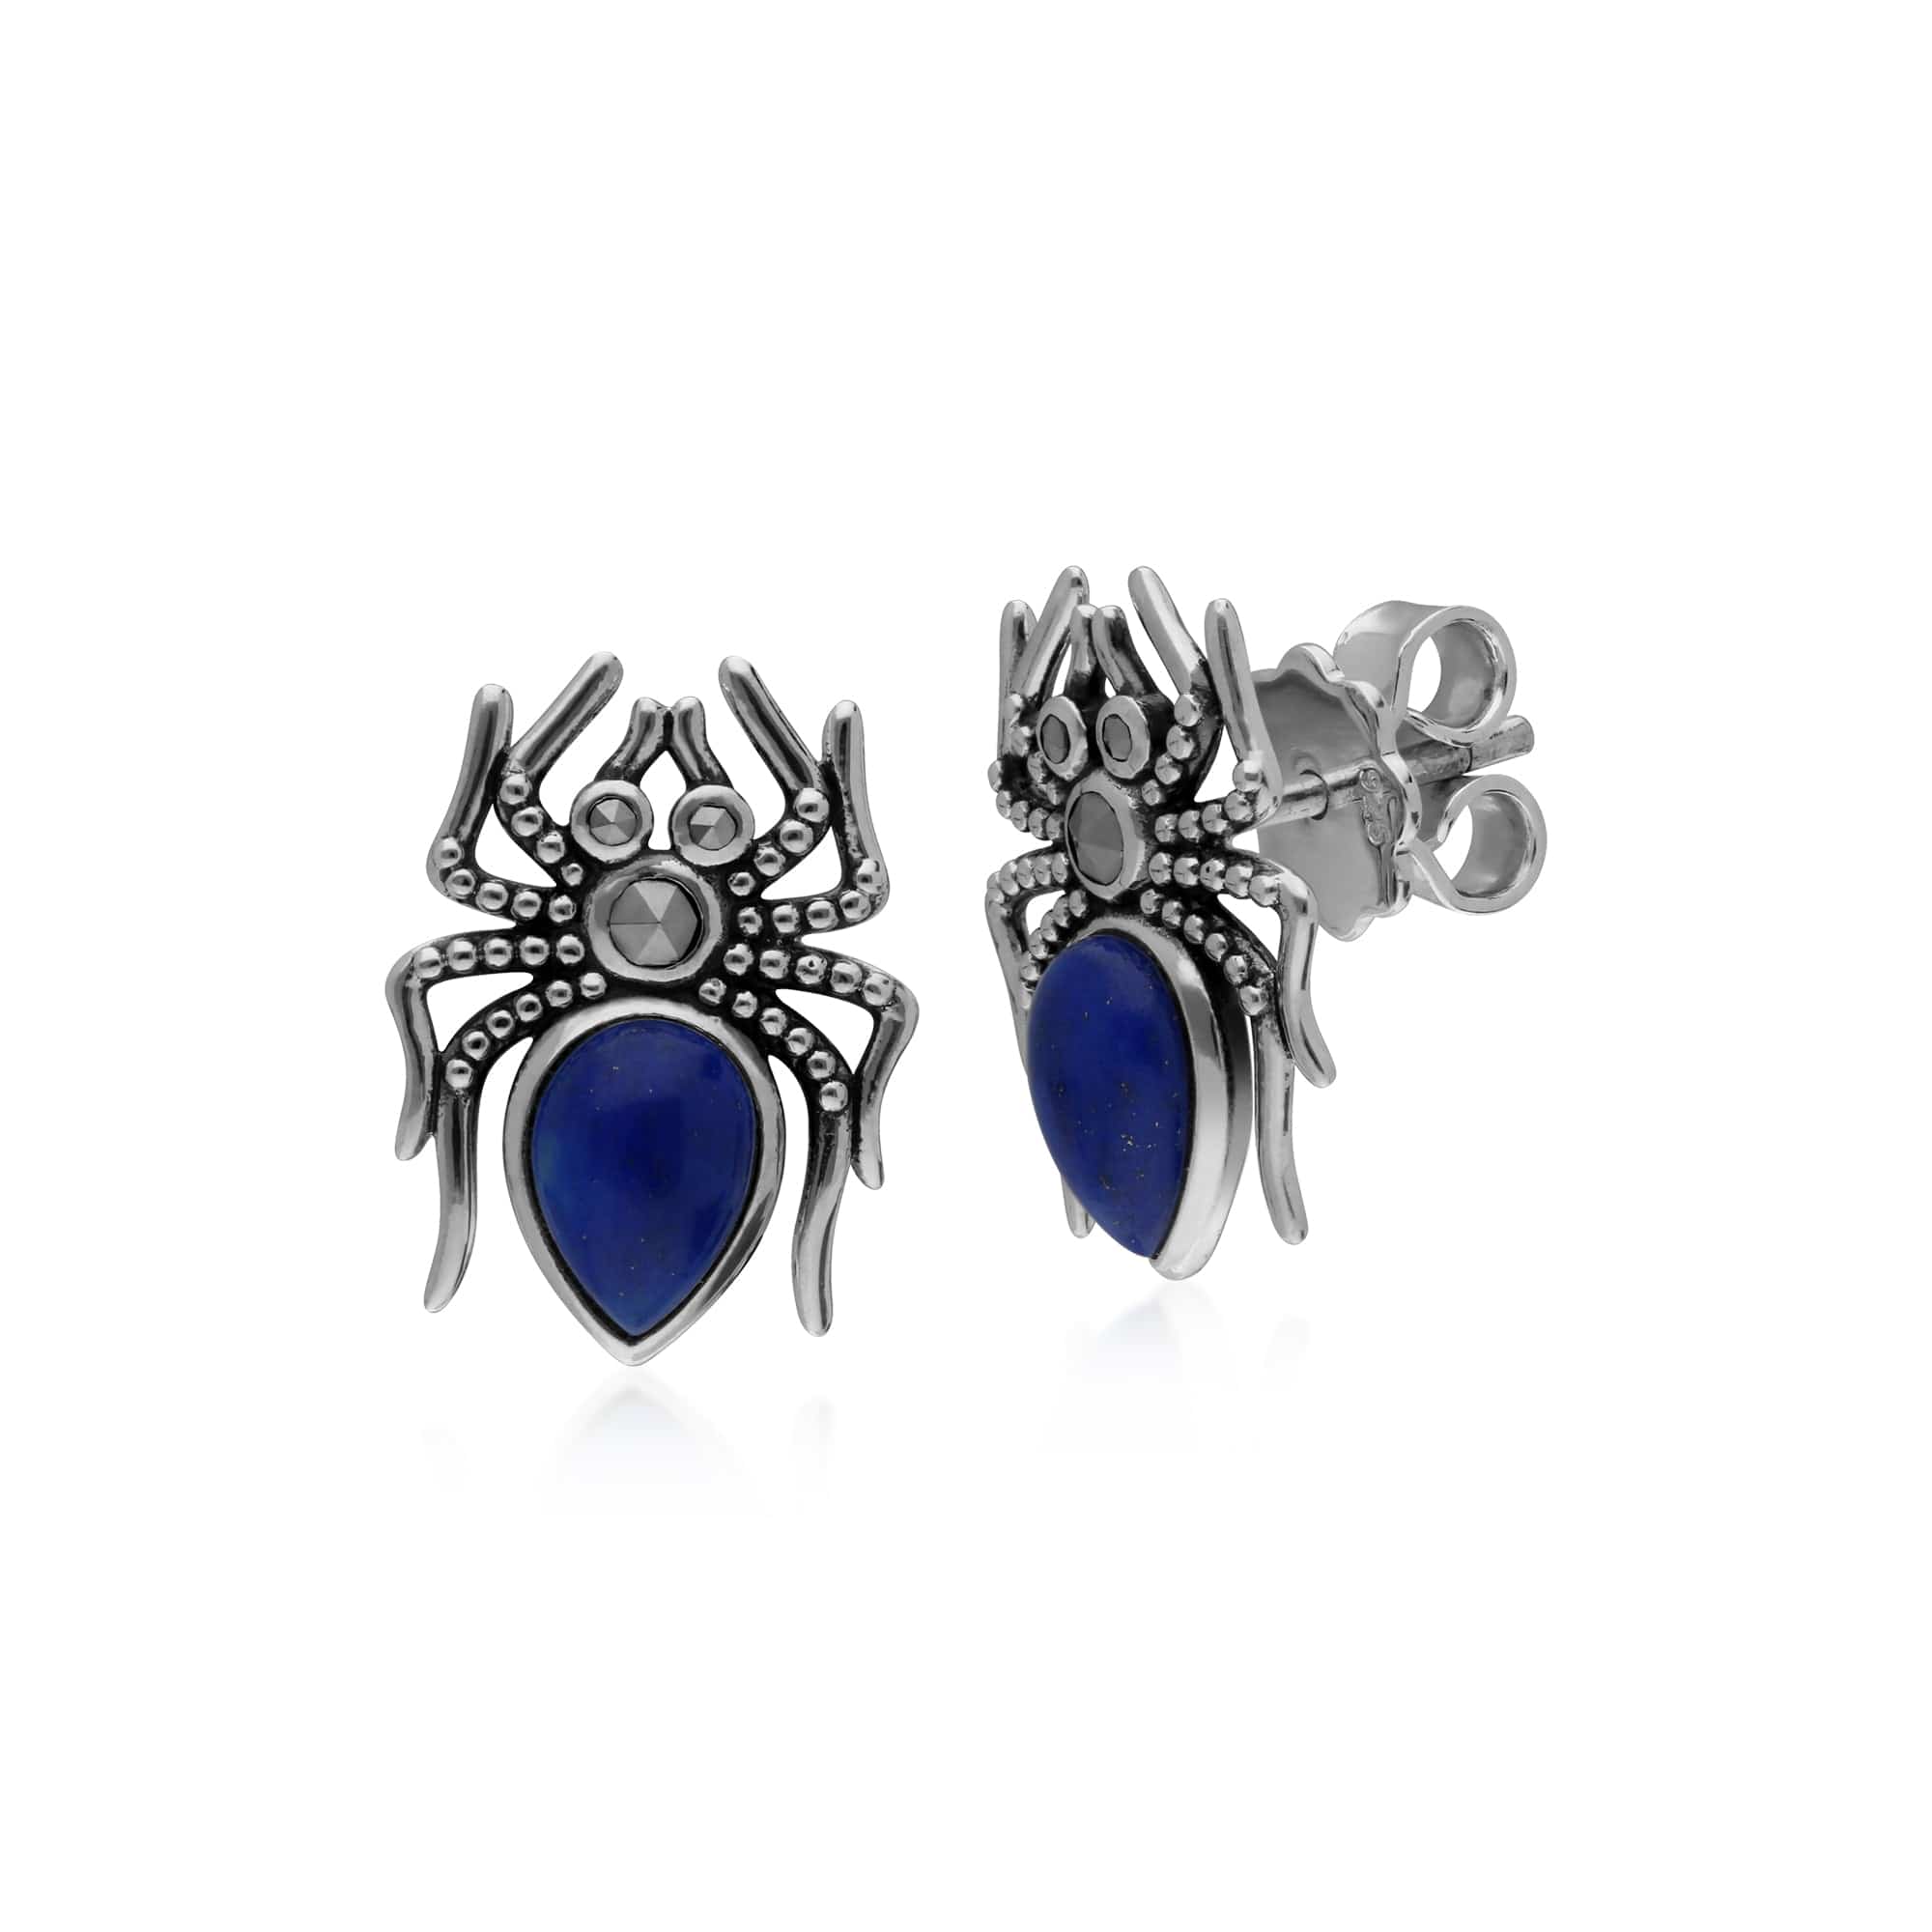 214E863901925 Gemondo Sterling Silver Lapis Lazuli & Marcasite Spider Stud Earrings 1